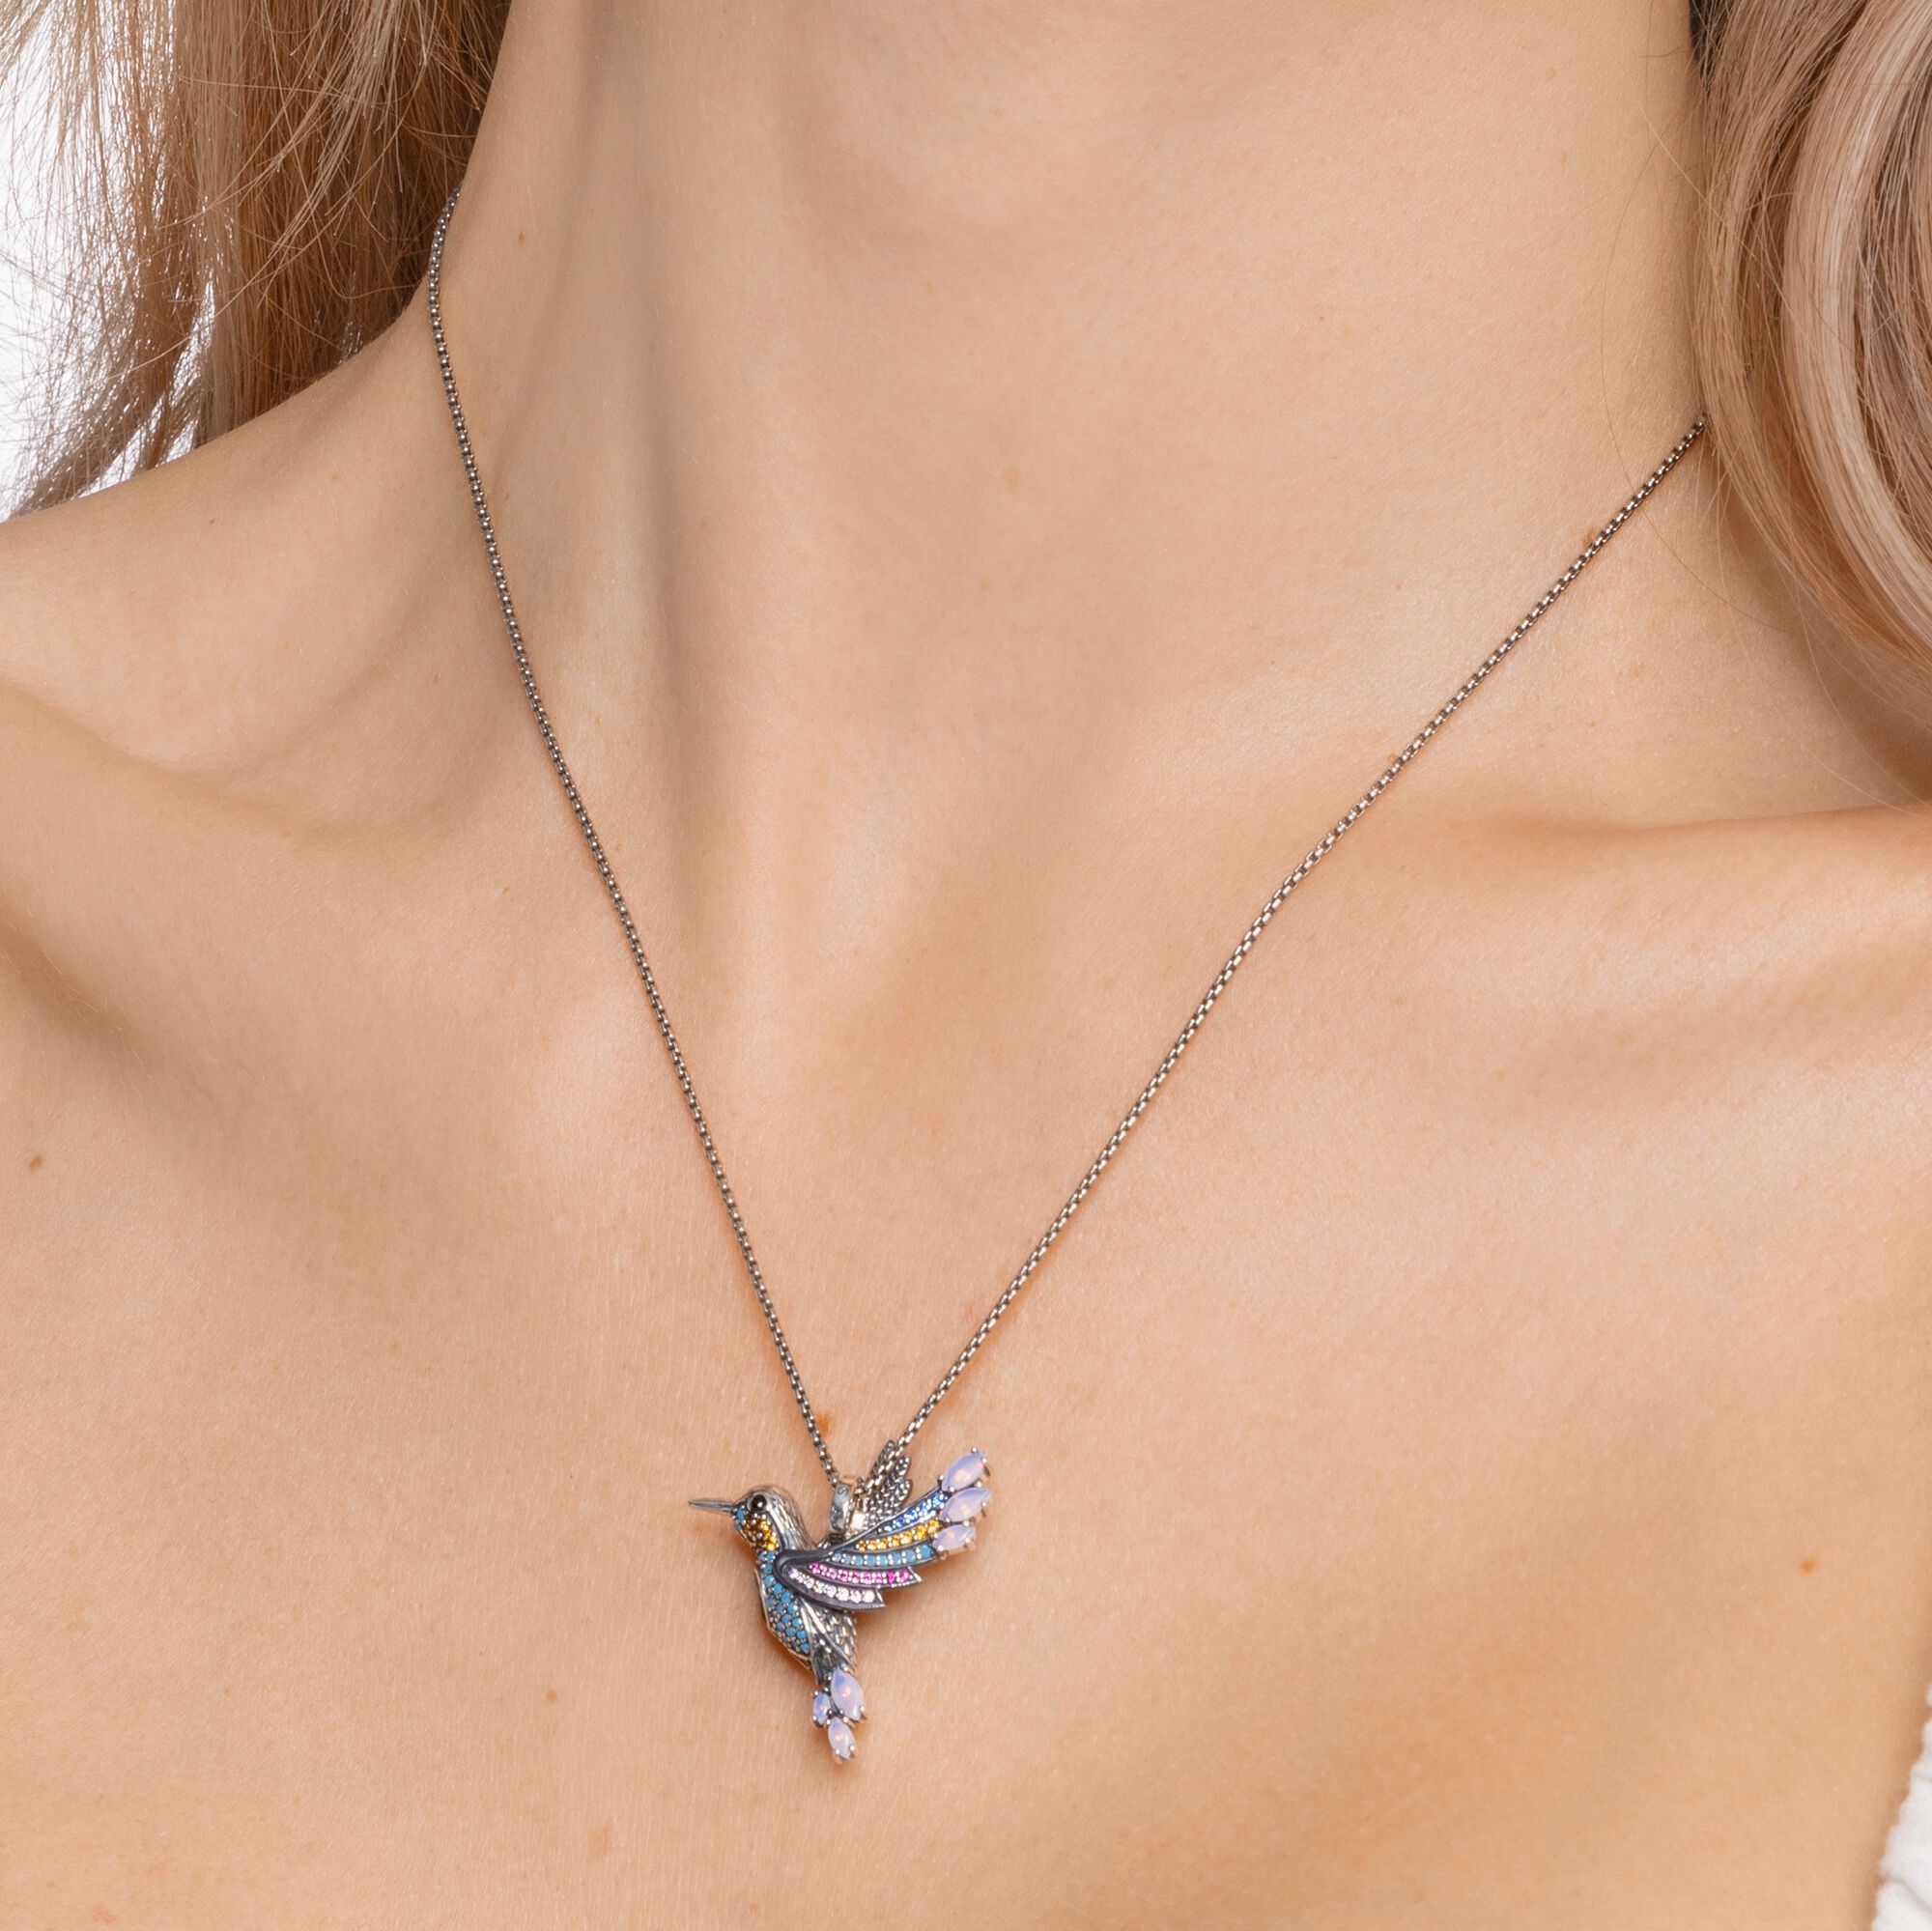 Kettenanhänger für Damen: bunter Kolibri – THOMAS SABO